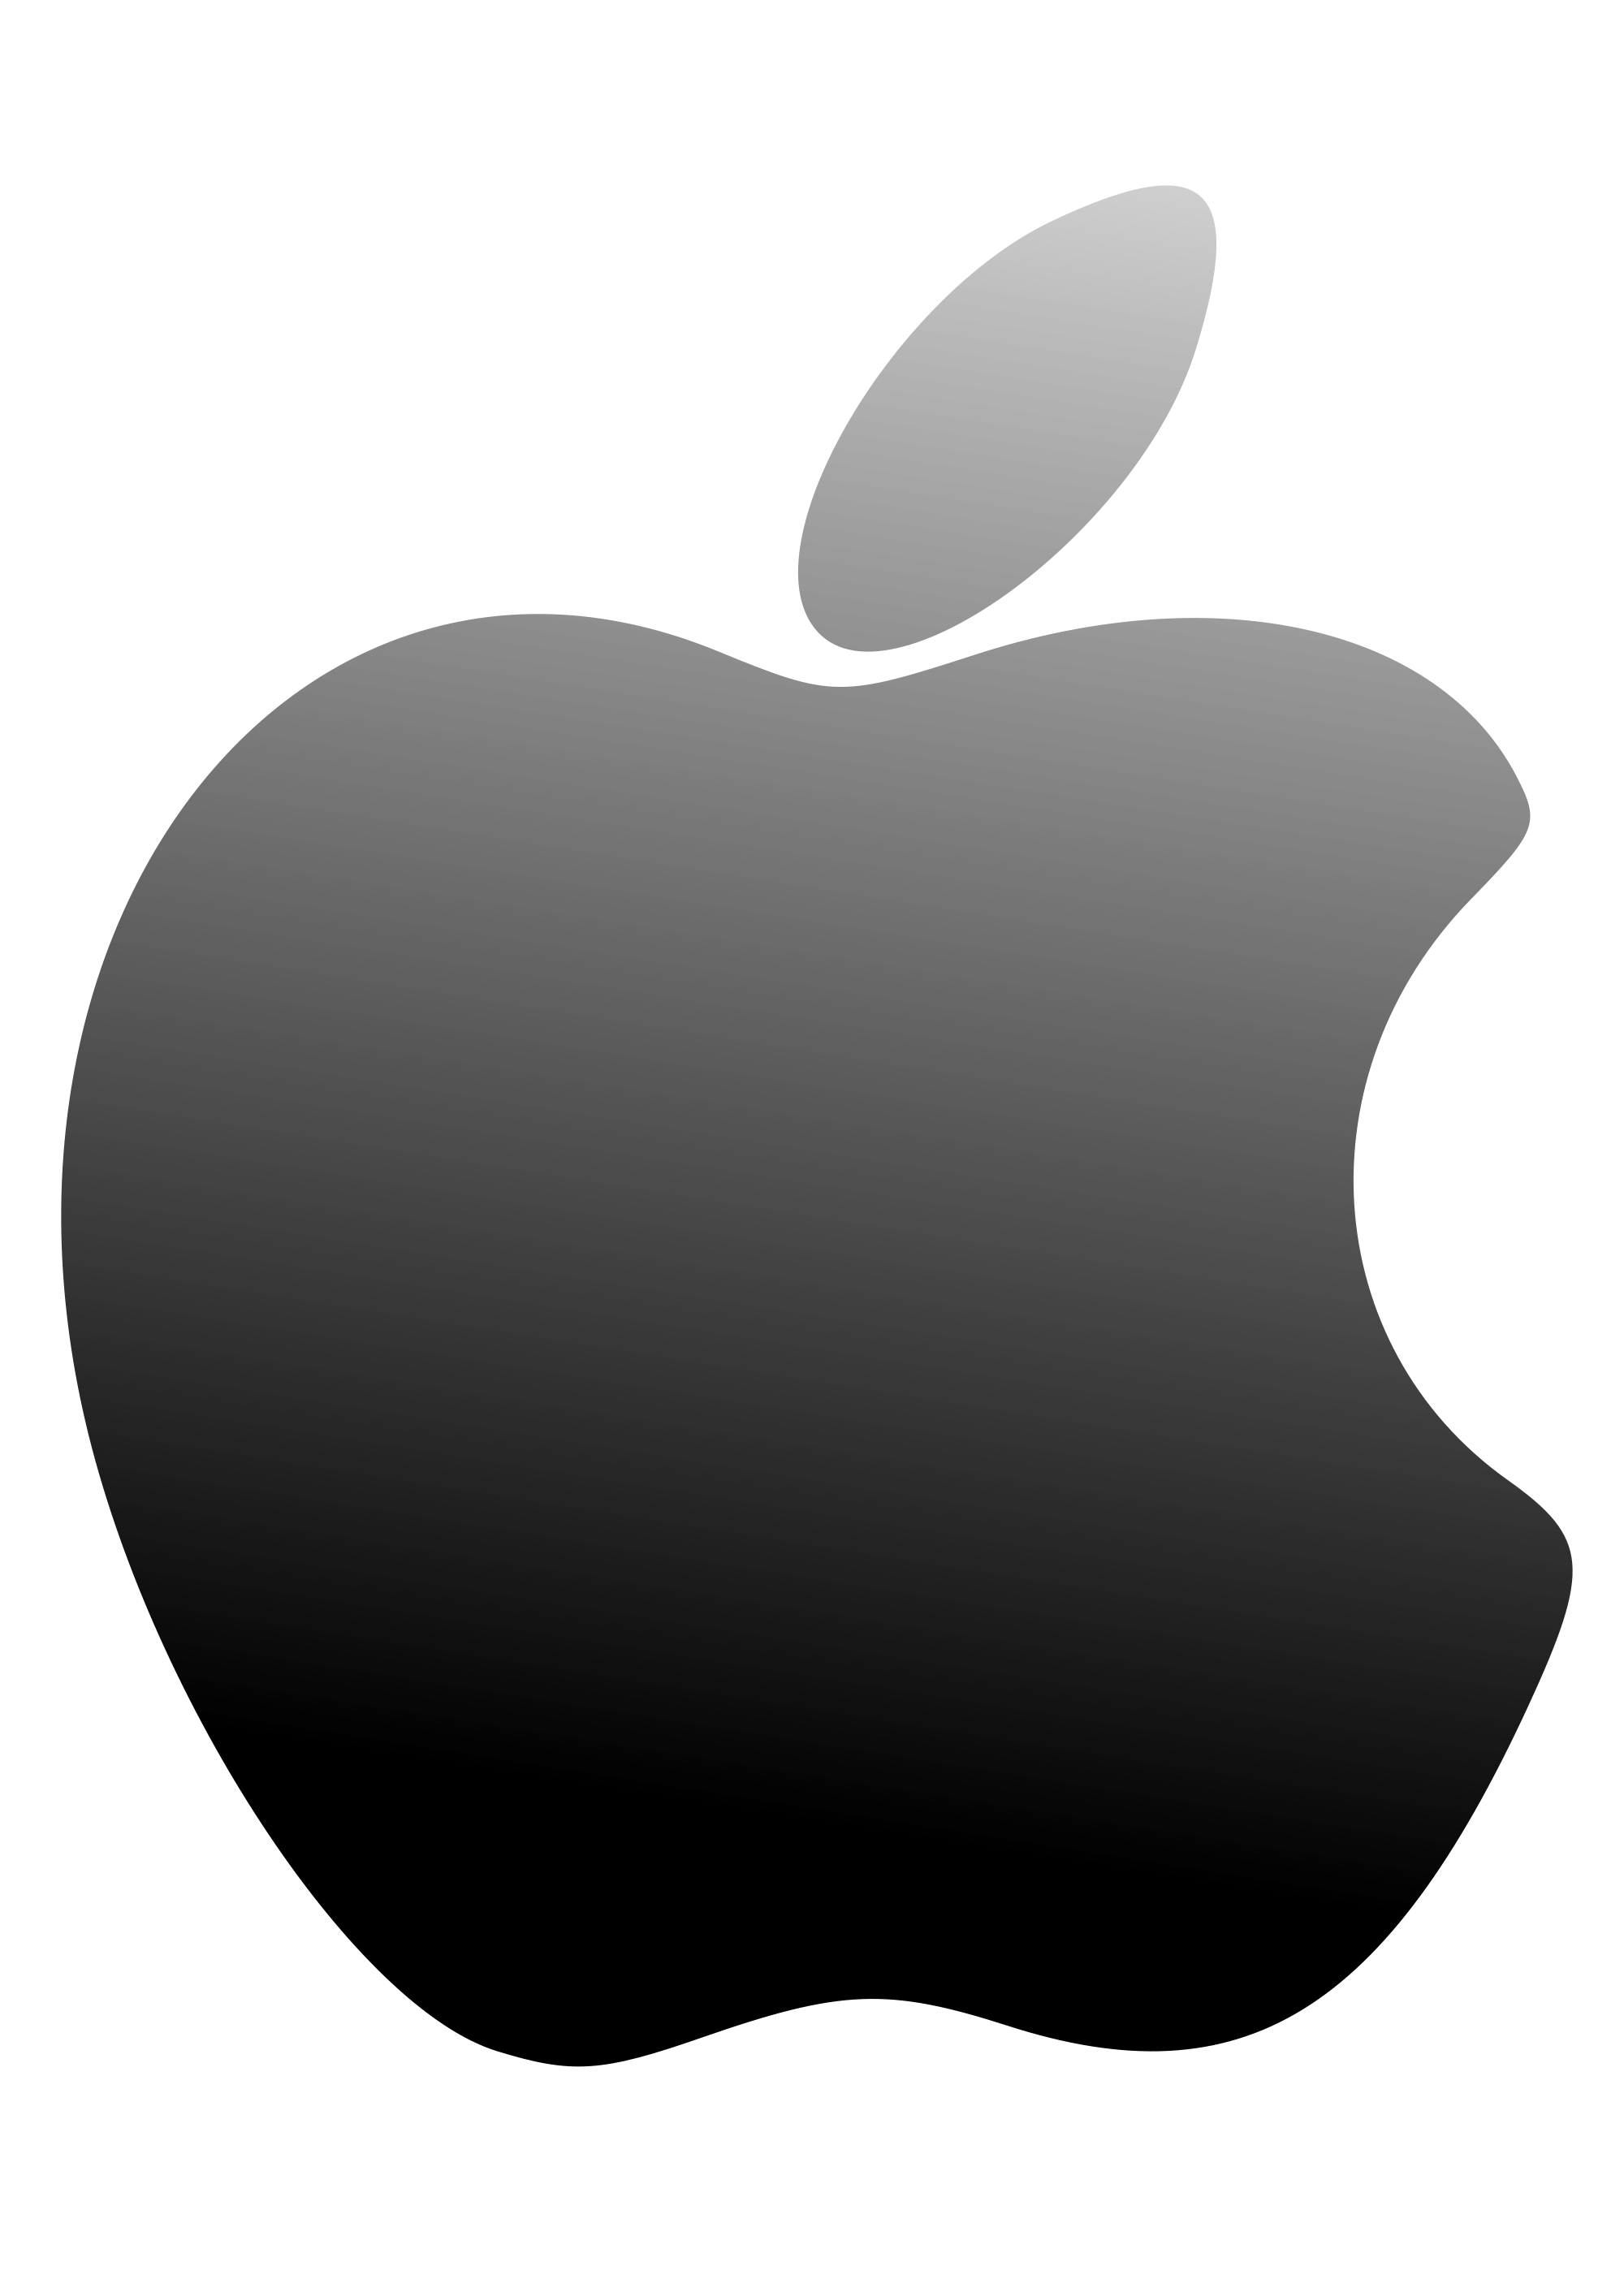 Transparent Apple Logo - apple logo clipart transparent background - image #13